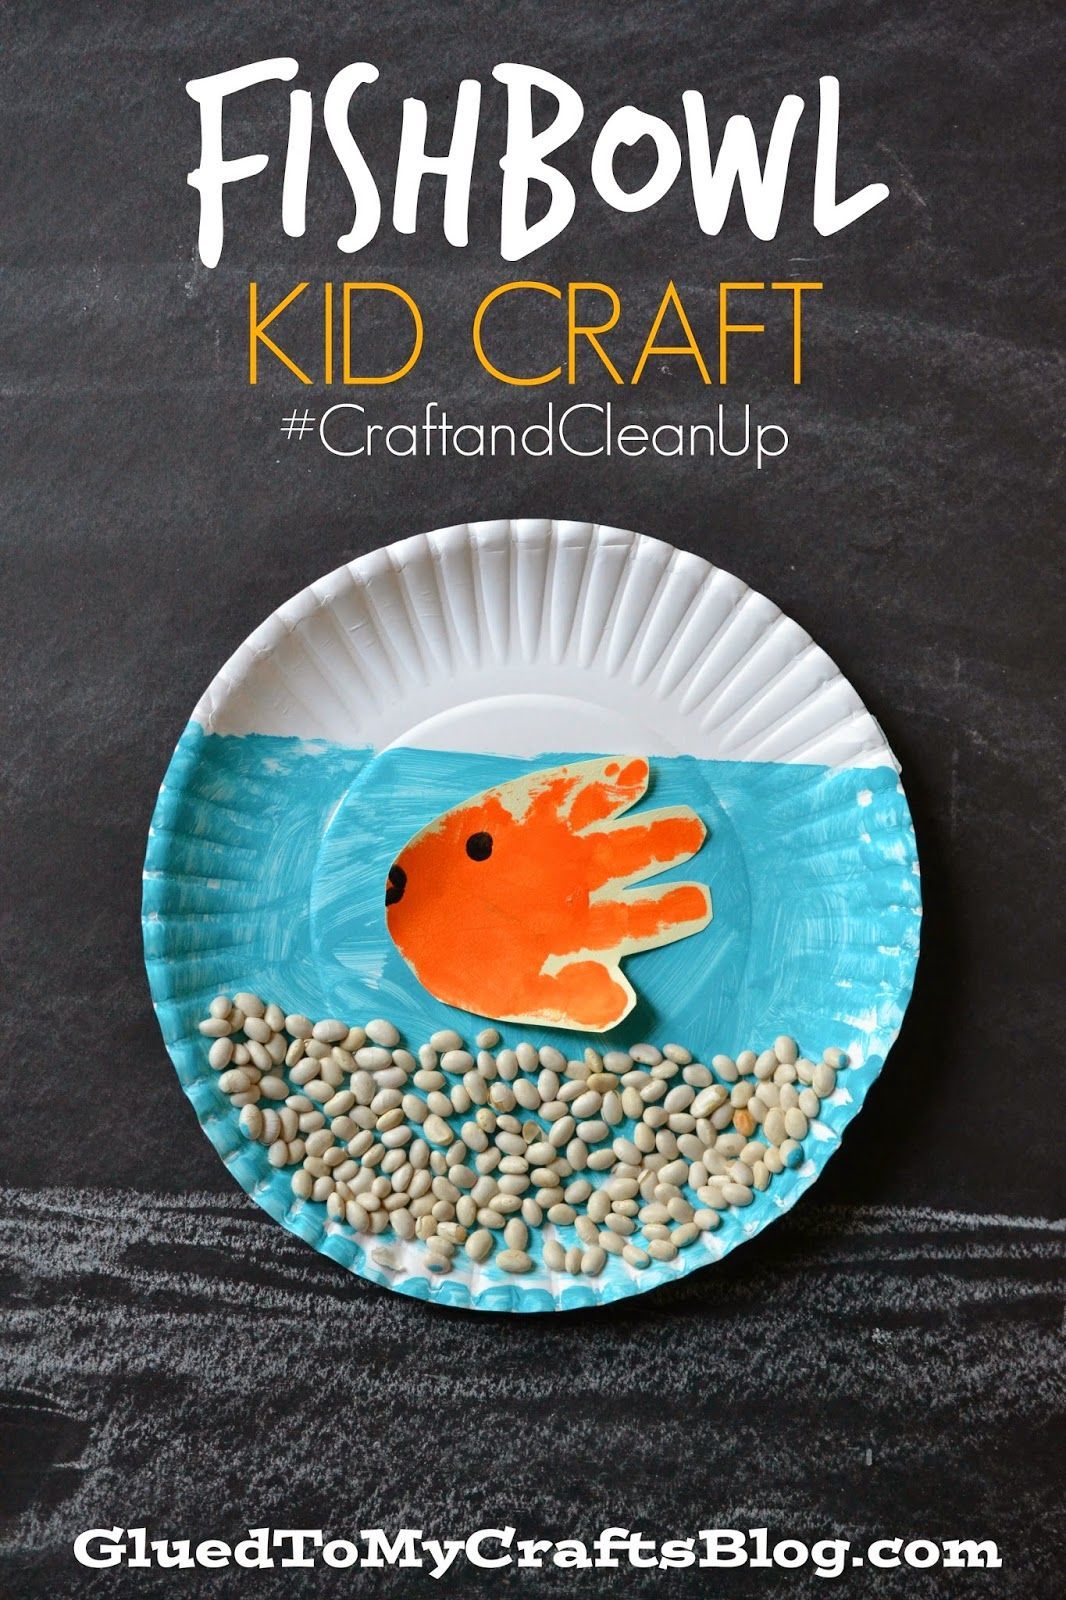 Fishbowl {Kid Craft} by Cra